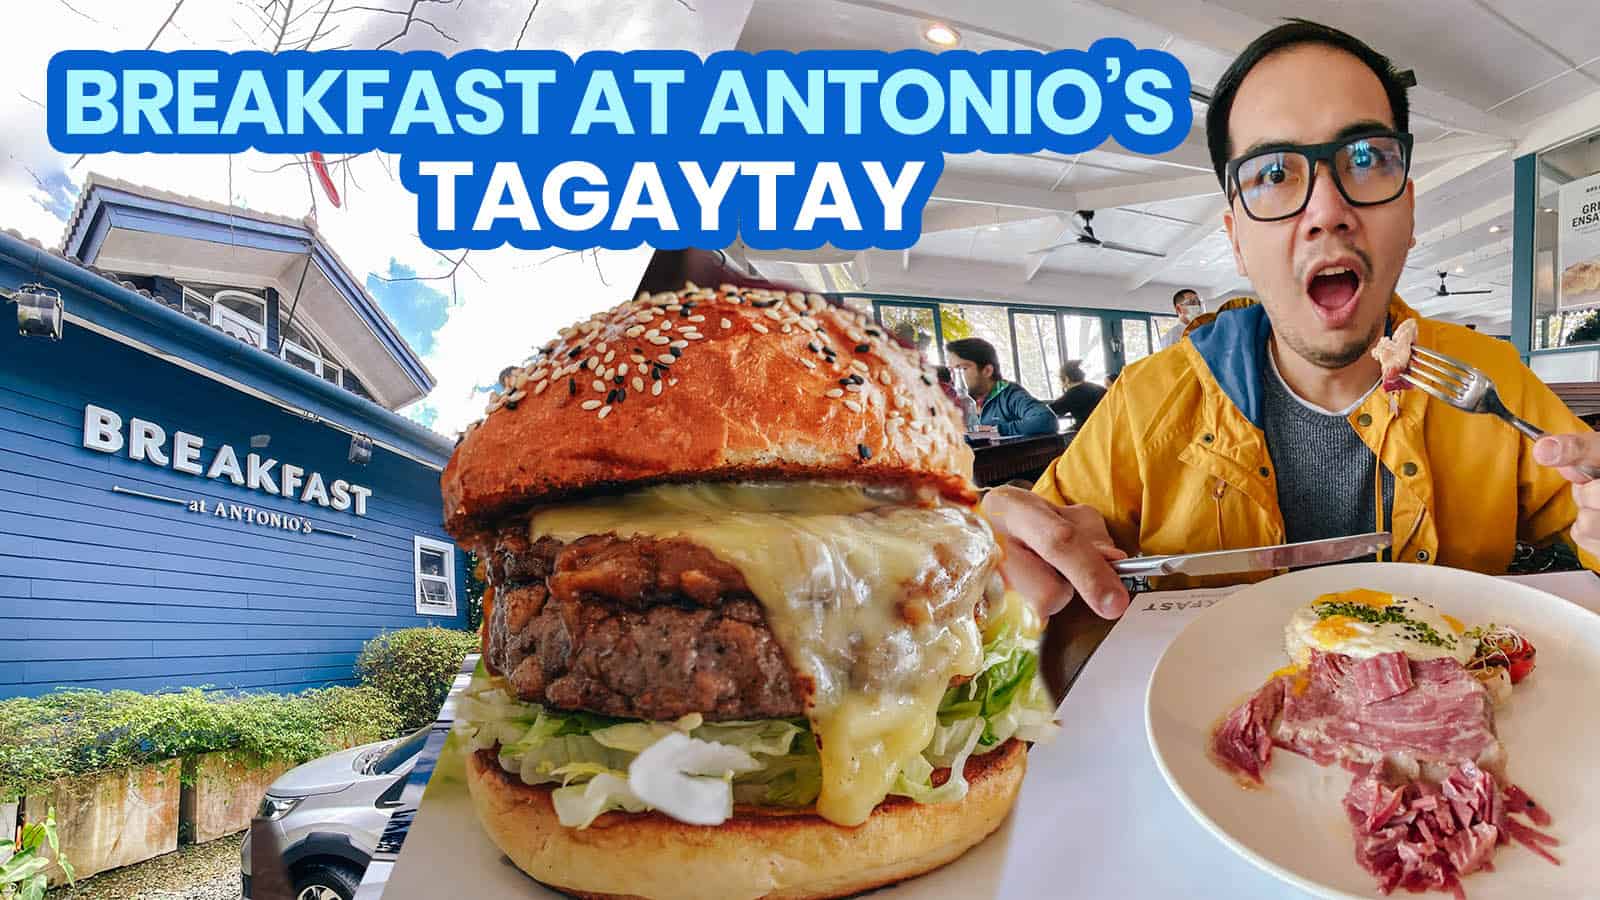 BREAKFAST AT ANTONIO’S TAGAYTAY Restaurant Guide & Menu